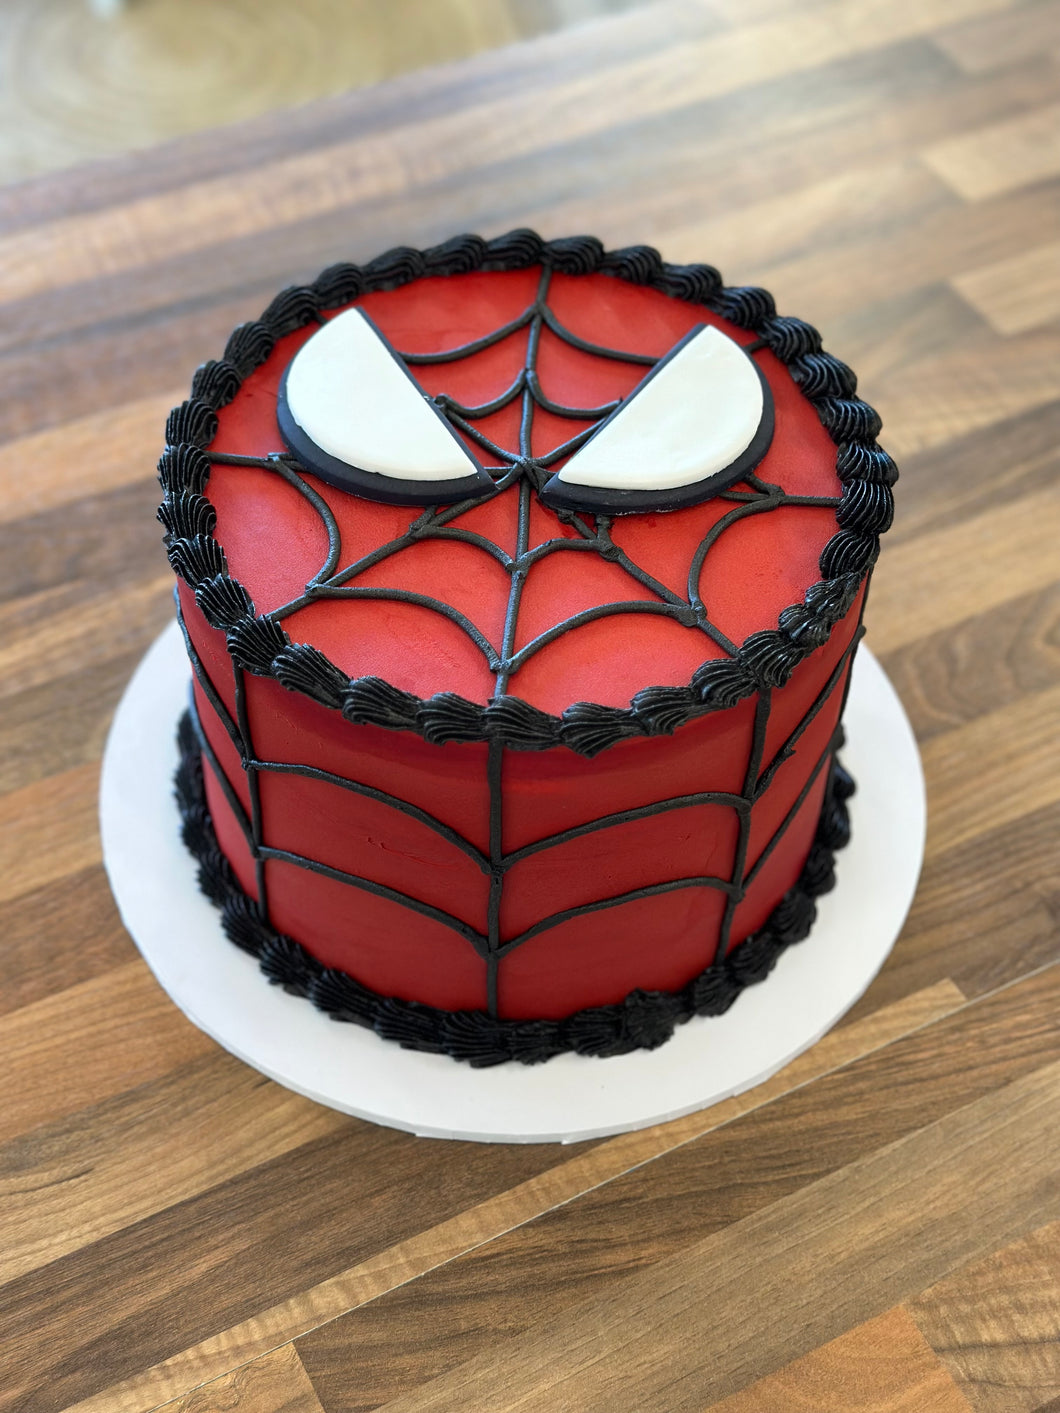 Giant Spider Man Cake